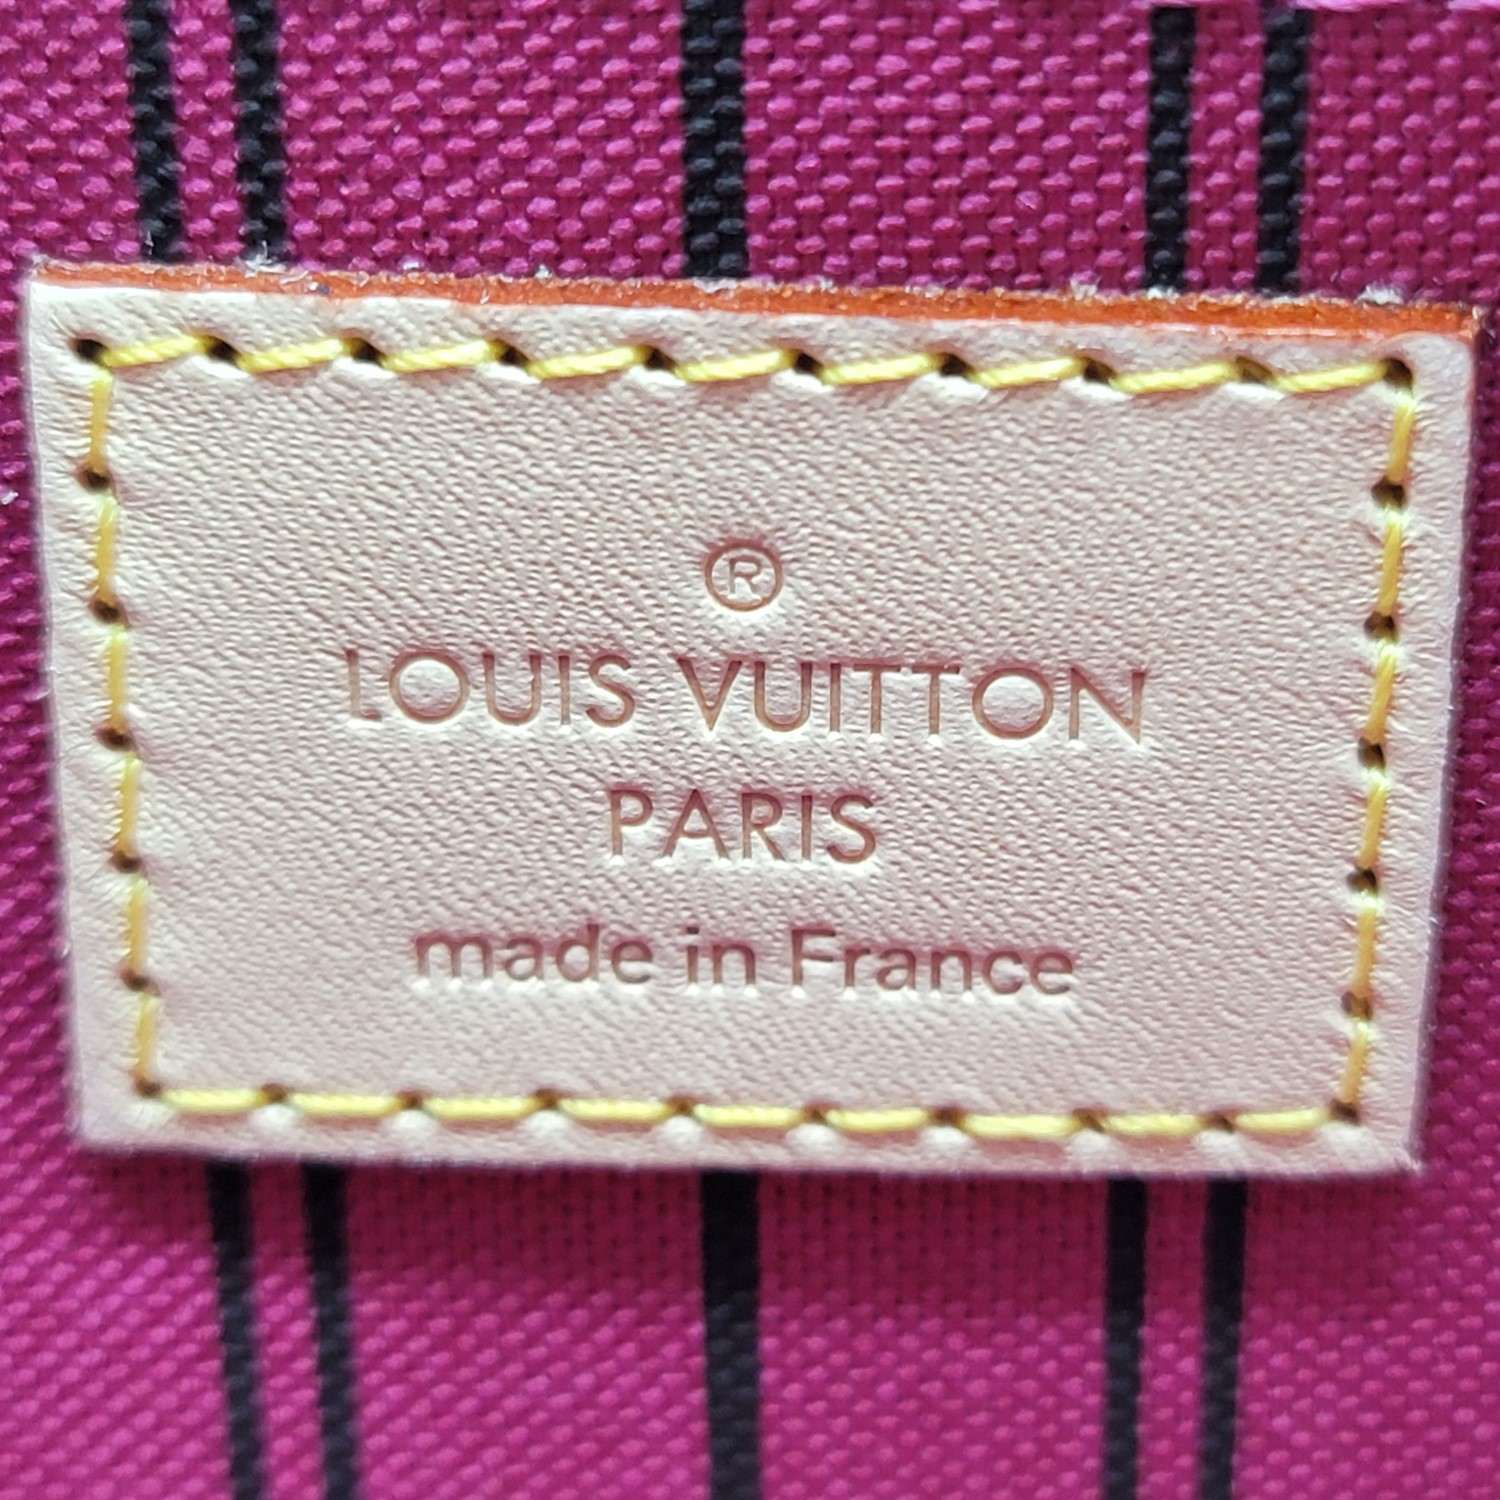 Louis Vuitton mono neverfull GM peony **21/22 model** – My